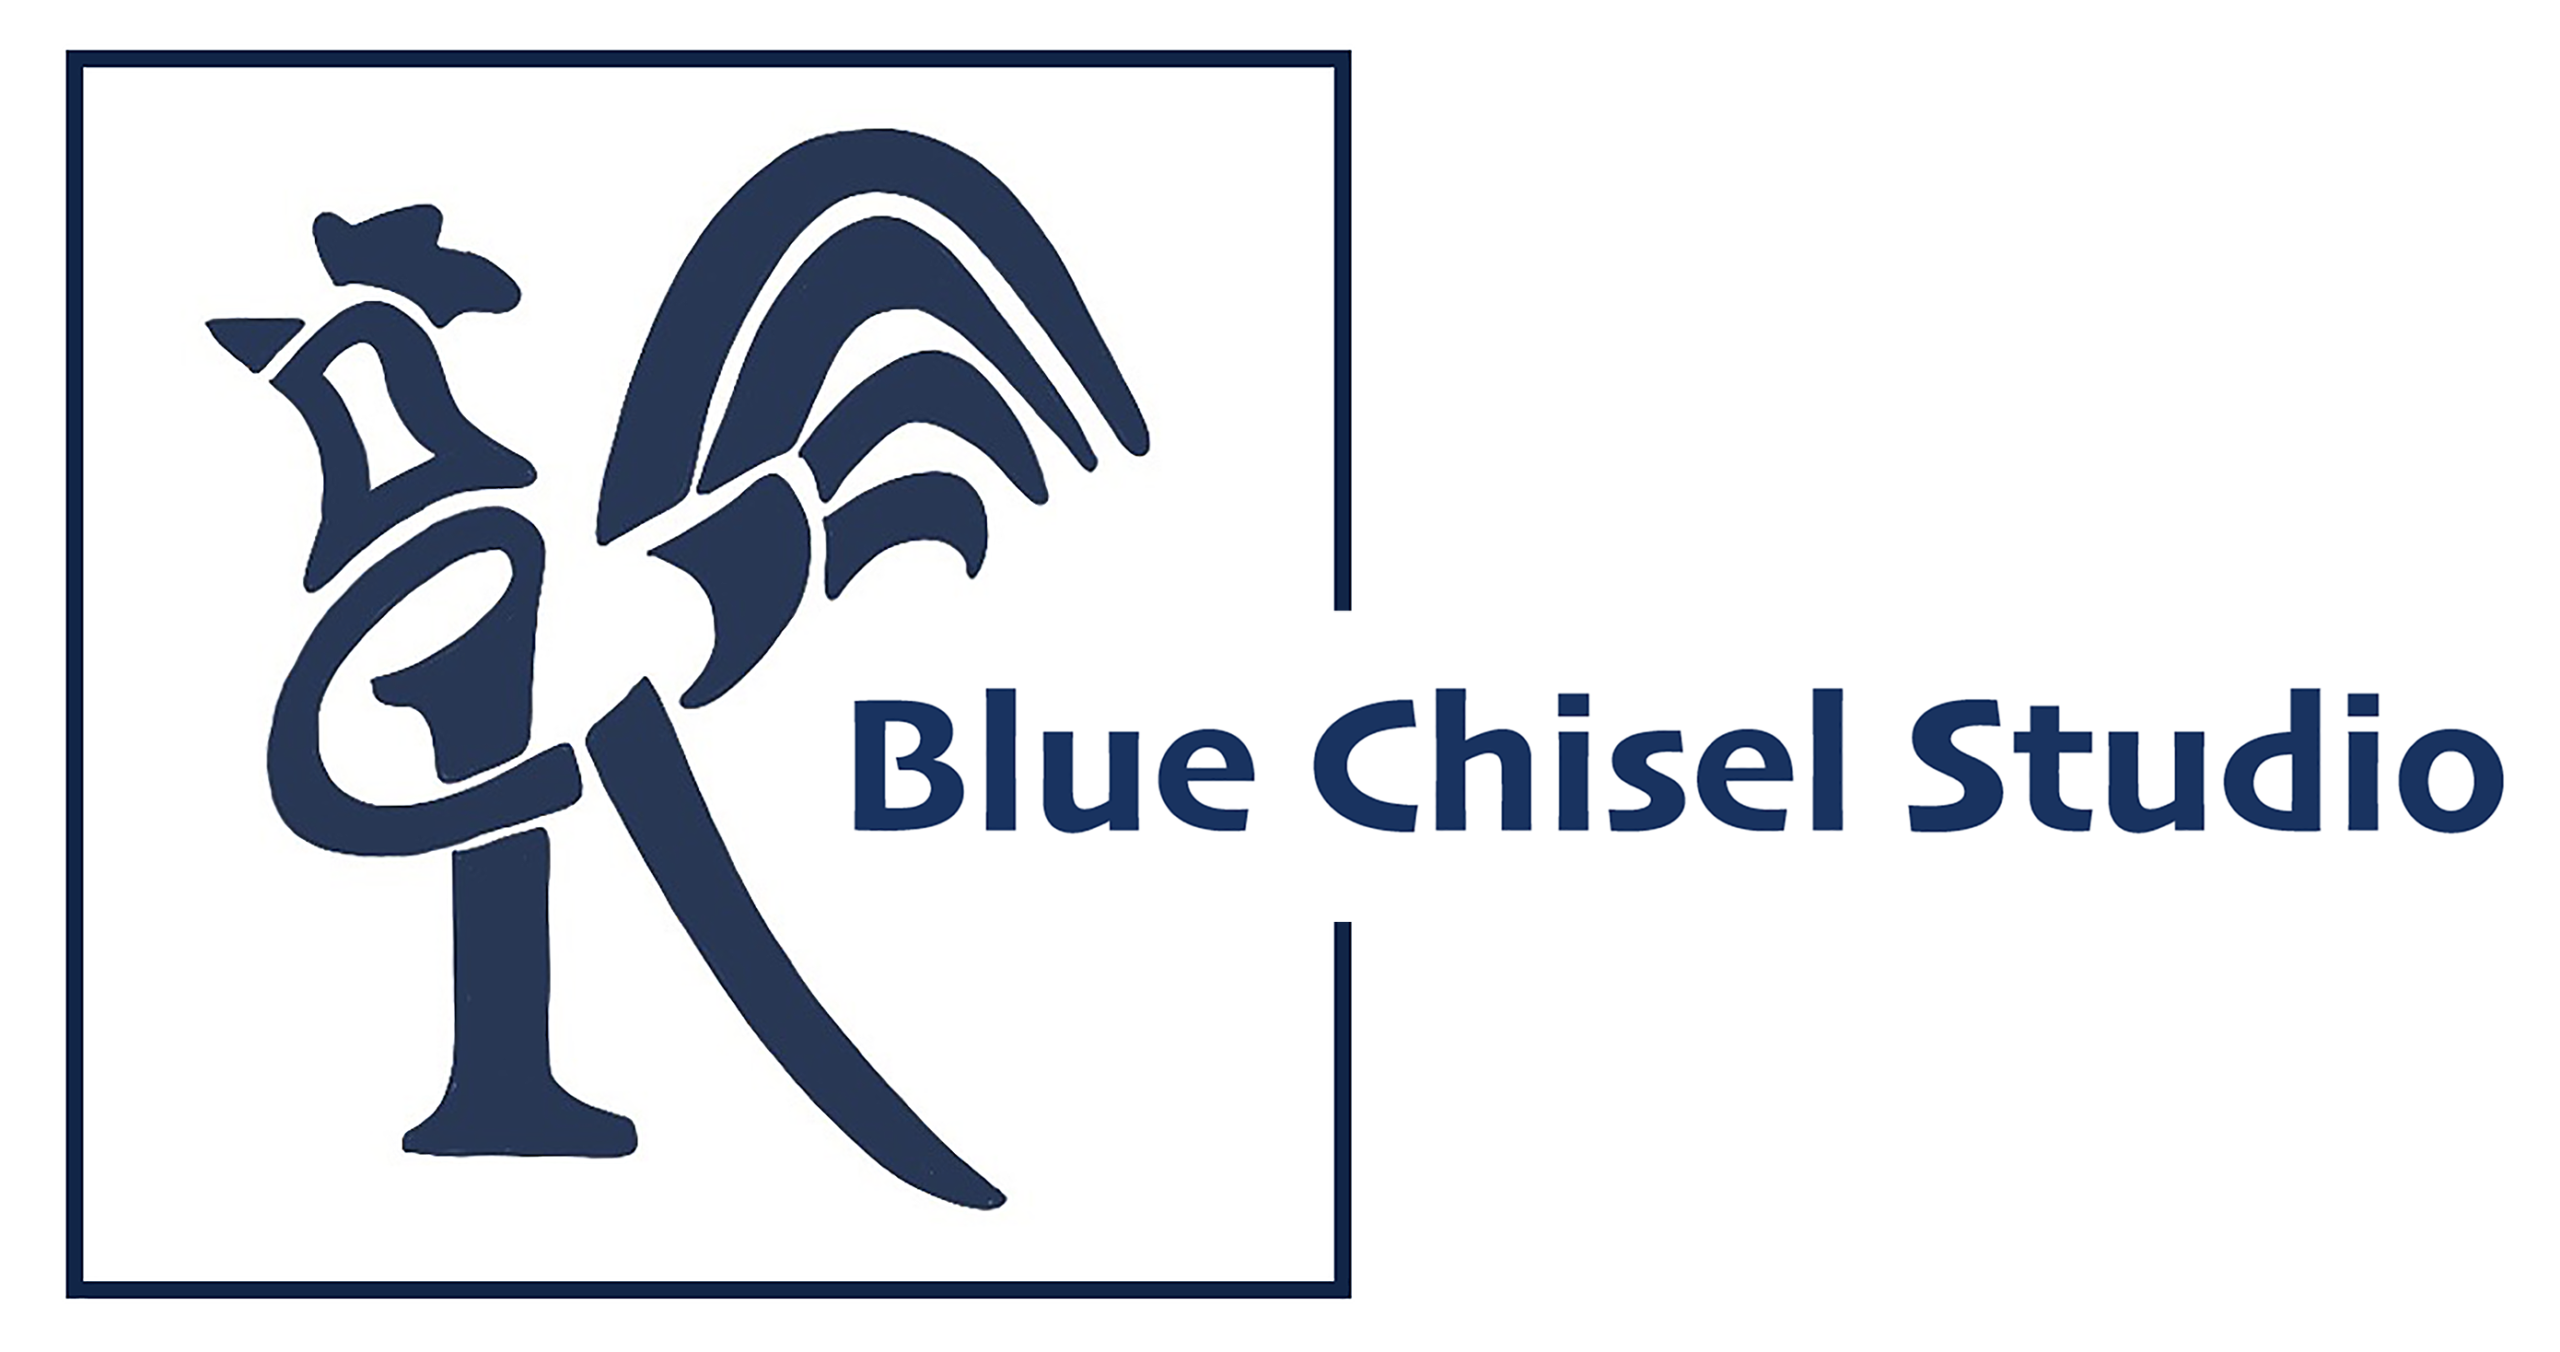 Blue Chisel Studio